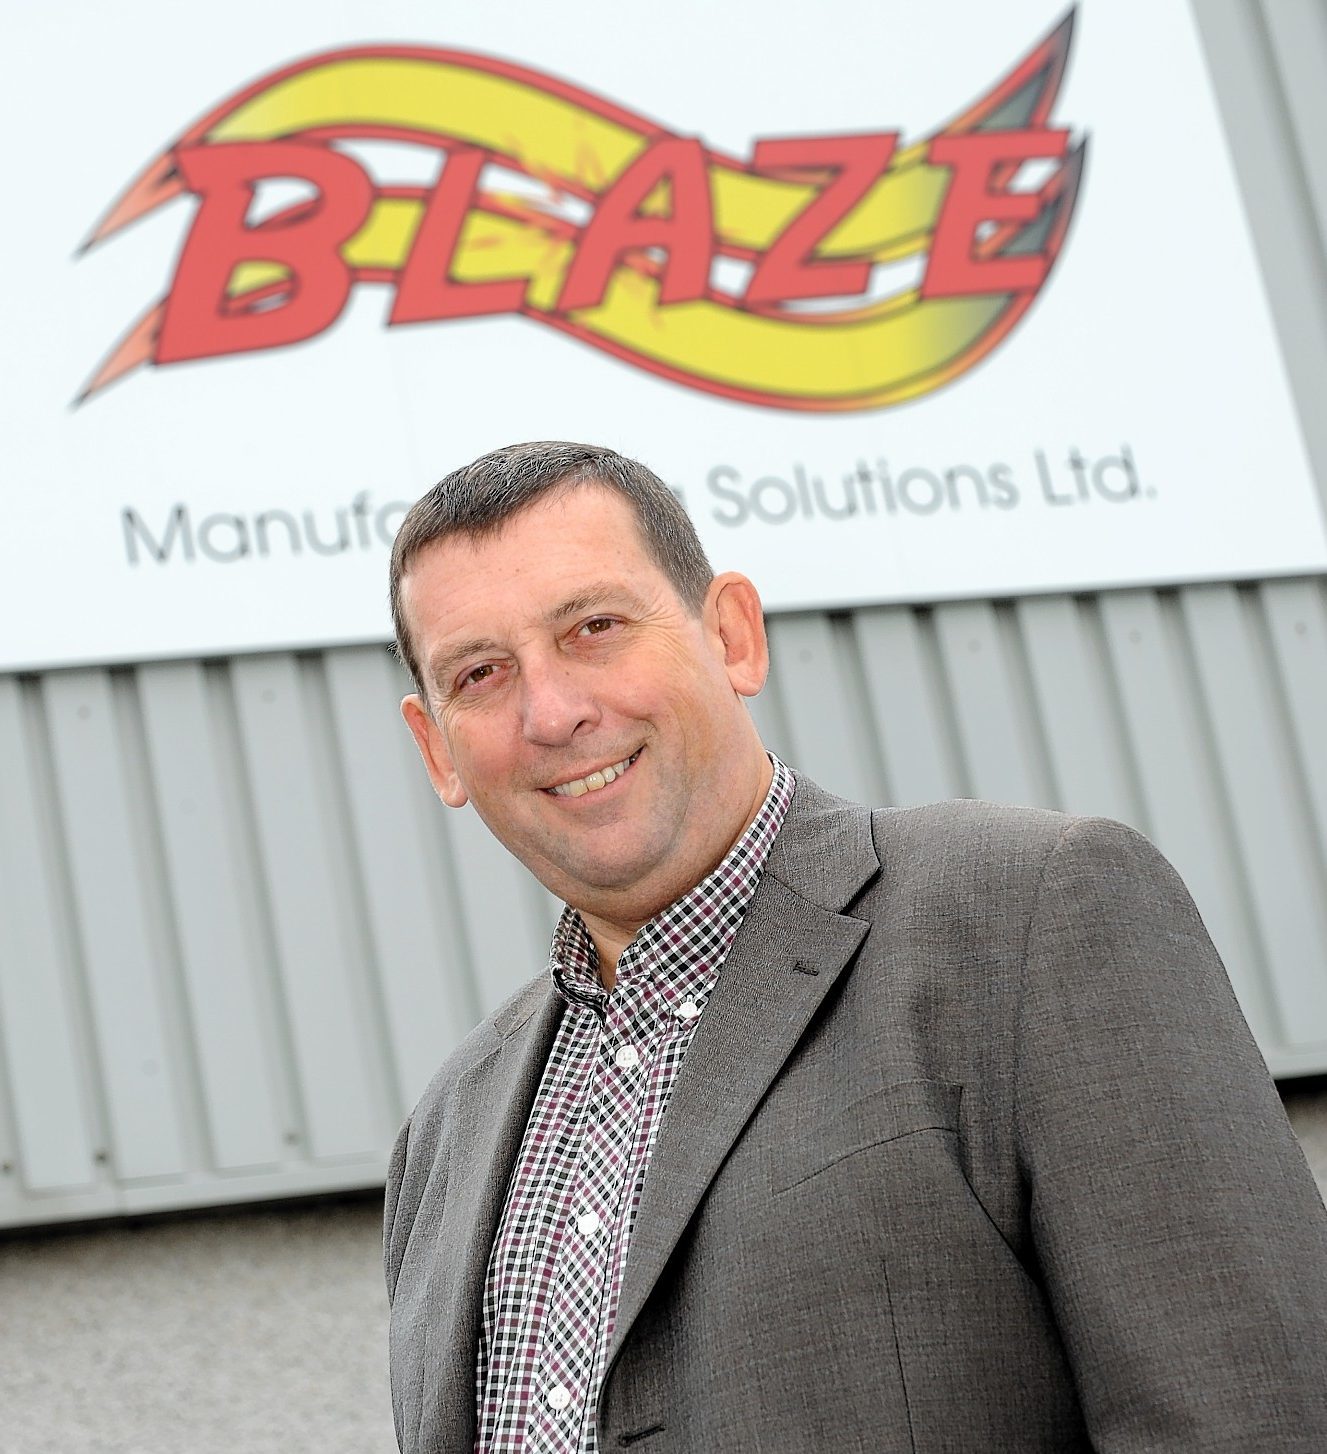 Blaze Manufacturing managing director, Howard Johnson.